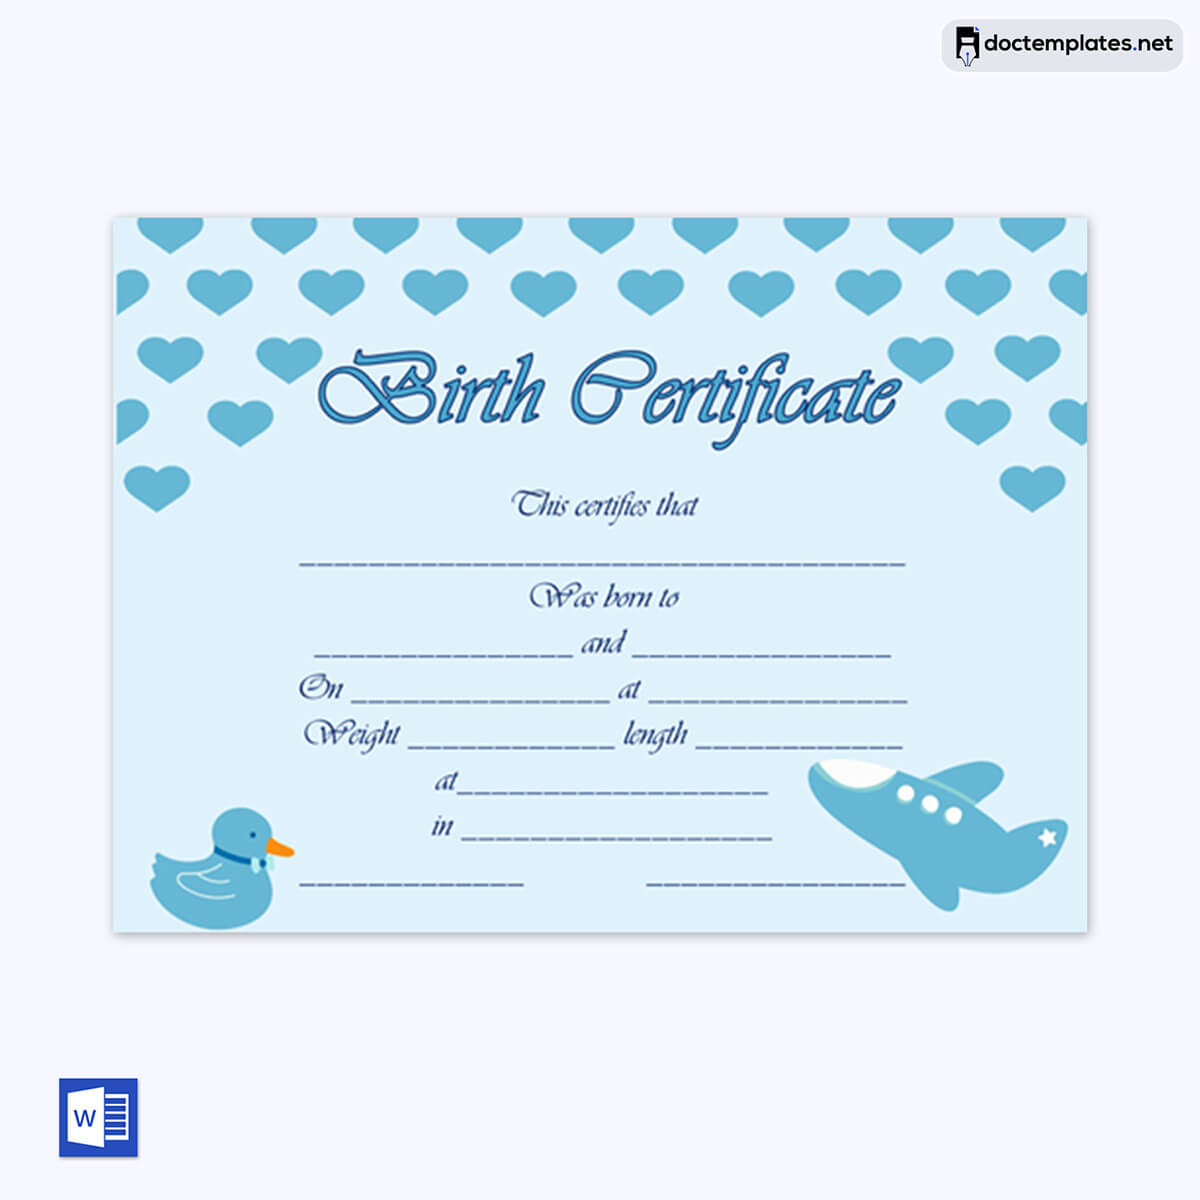 Image of Blank birth certificate PDF
Blank birth certificate PDF
05